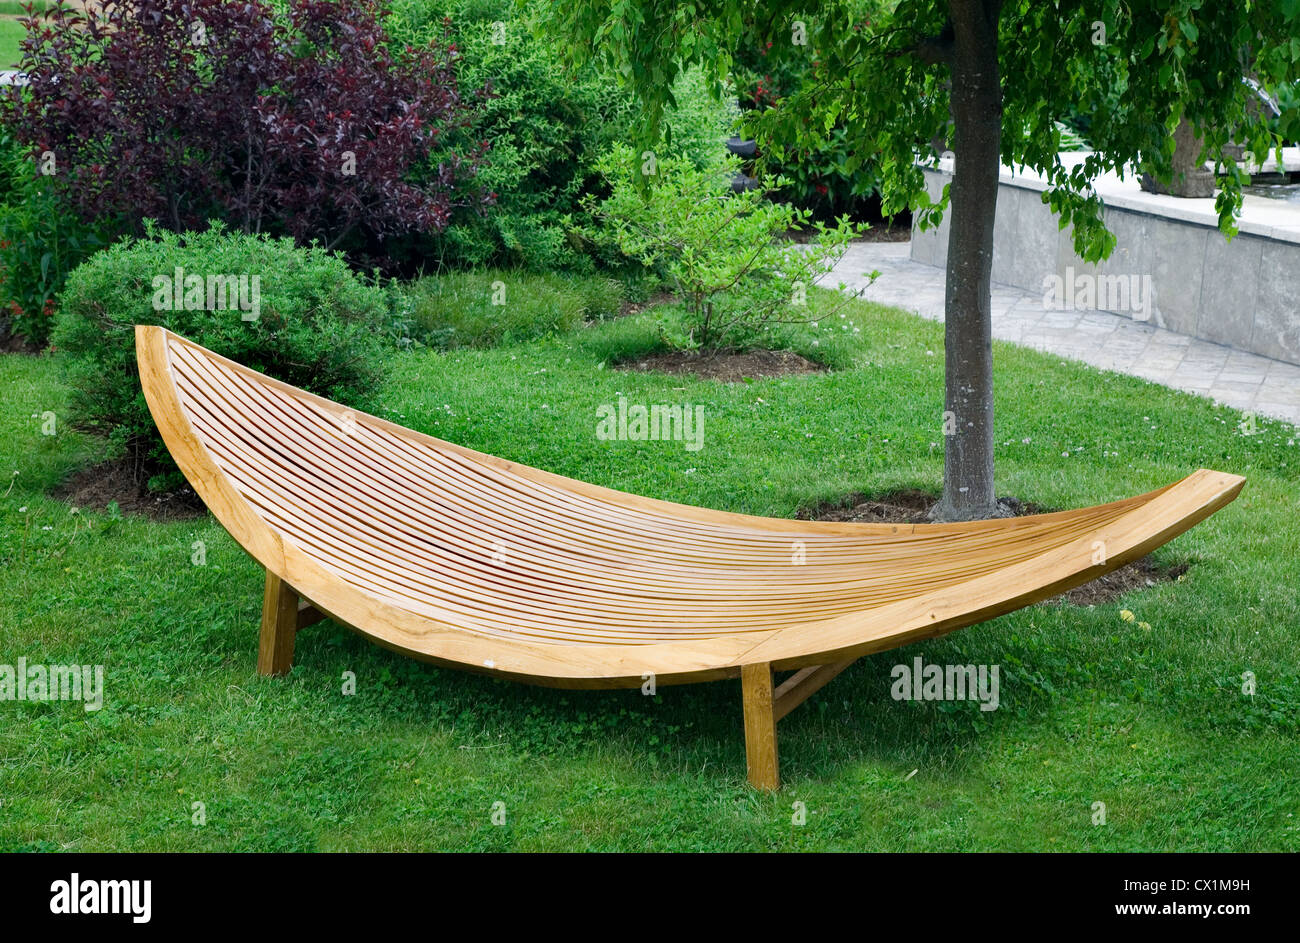 Sleek modern garden furniture made of wood and varnished. Stock Photo